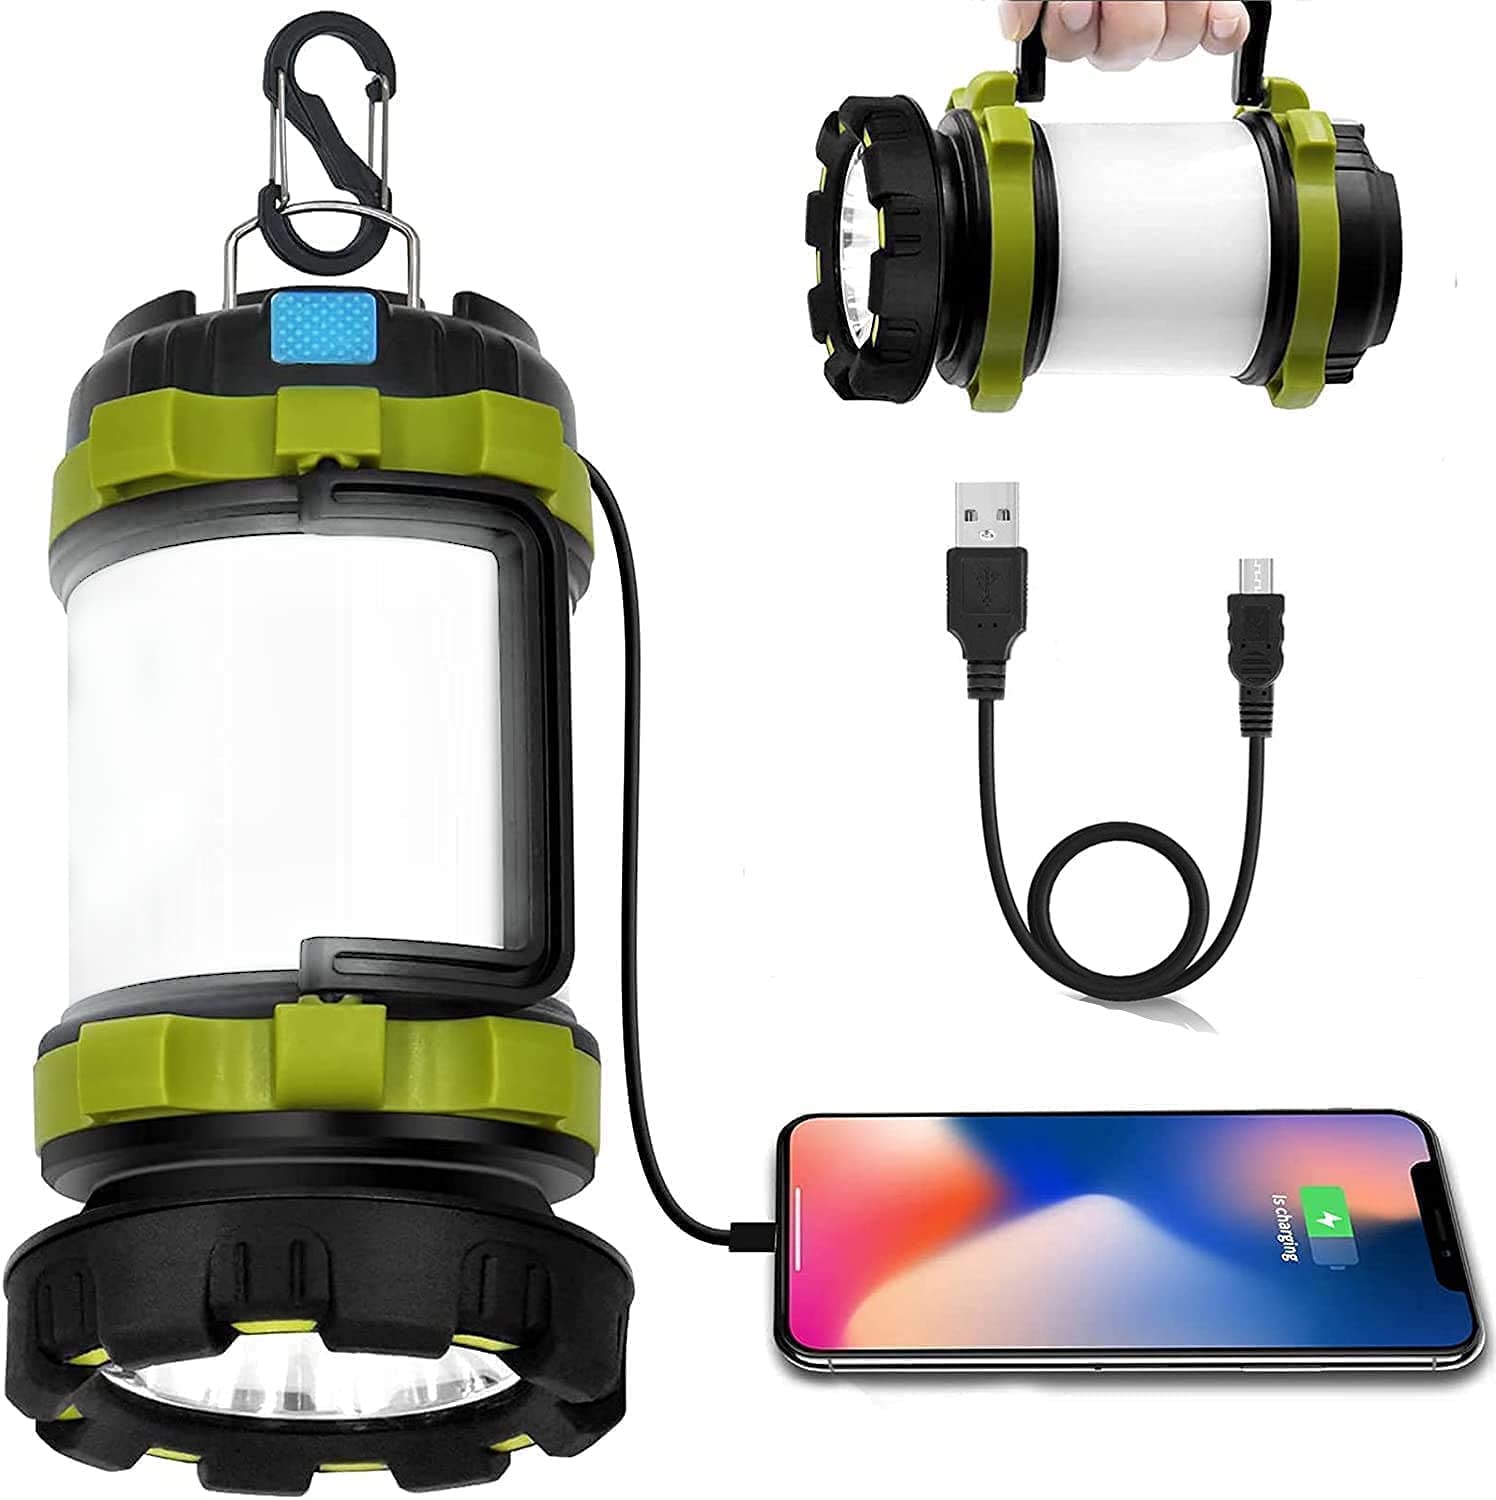 Etekcity LED Lantern Power Bank Review: Dual Purpose Portable Power